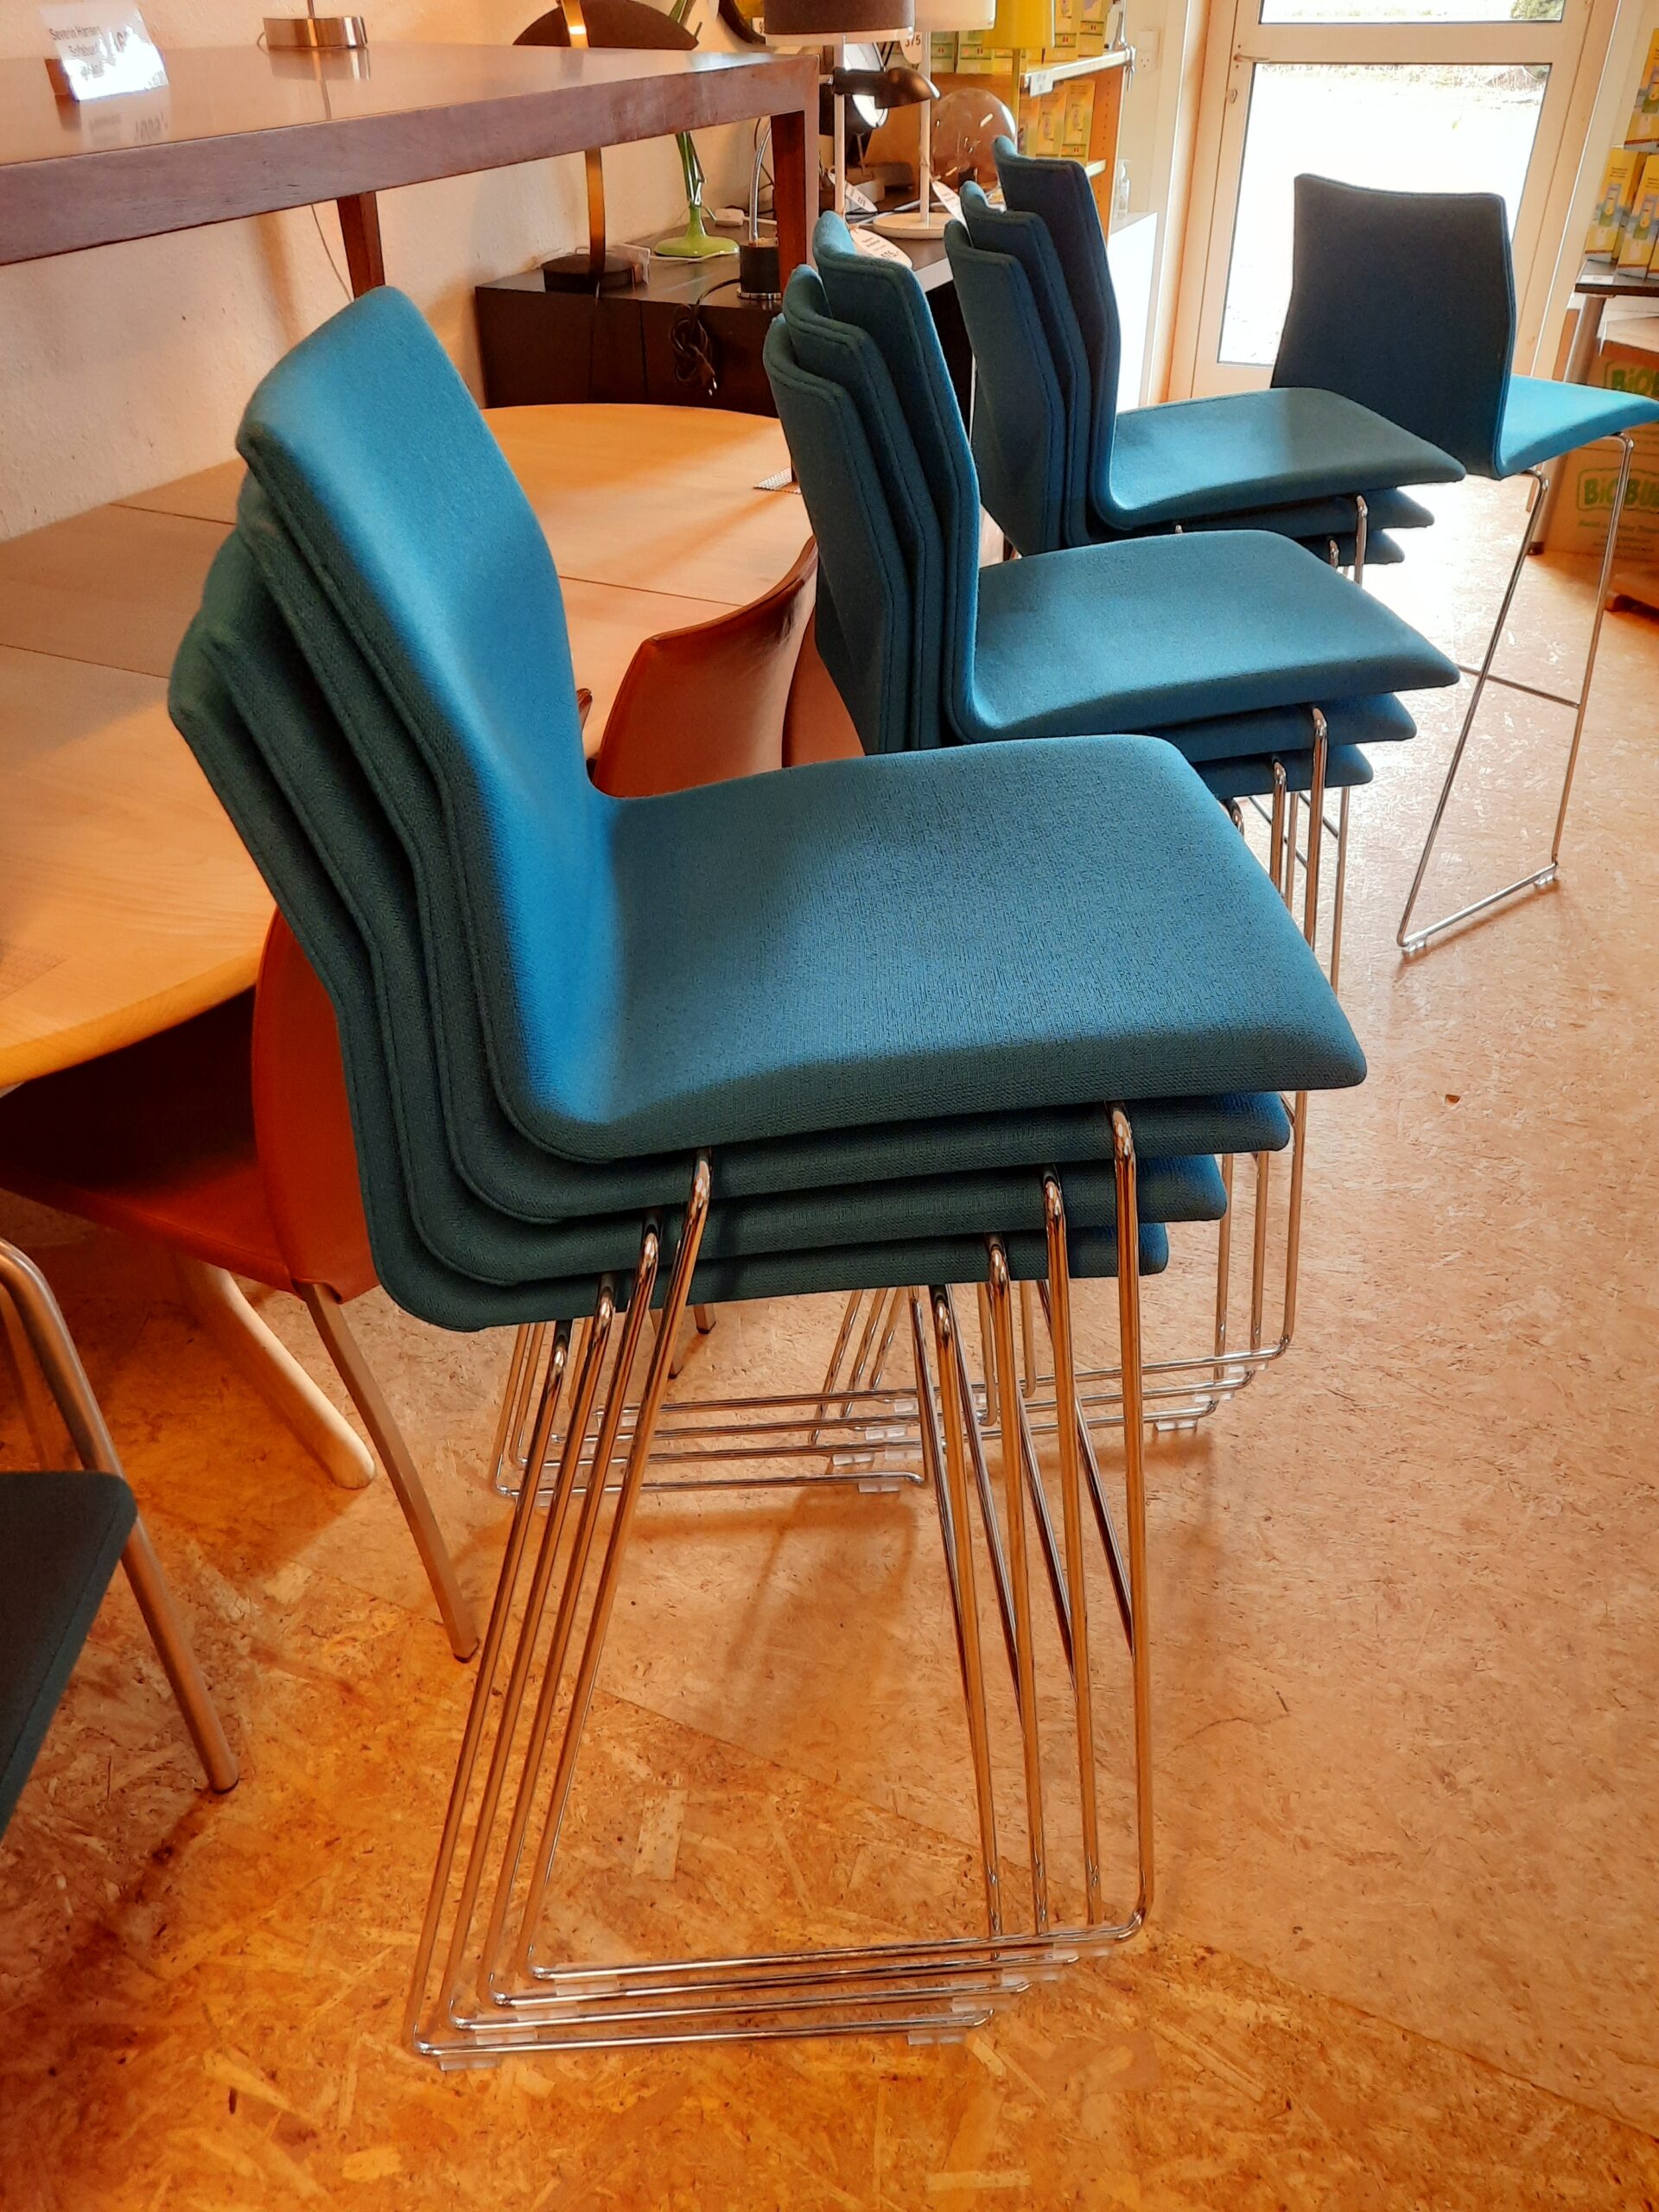 kål lov golf Four Design barstol betrukket med blåt stof. – Grevsen Genbrug